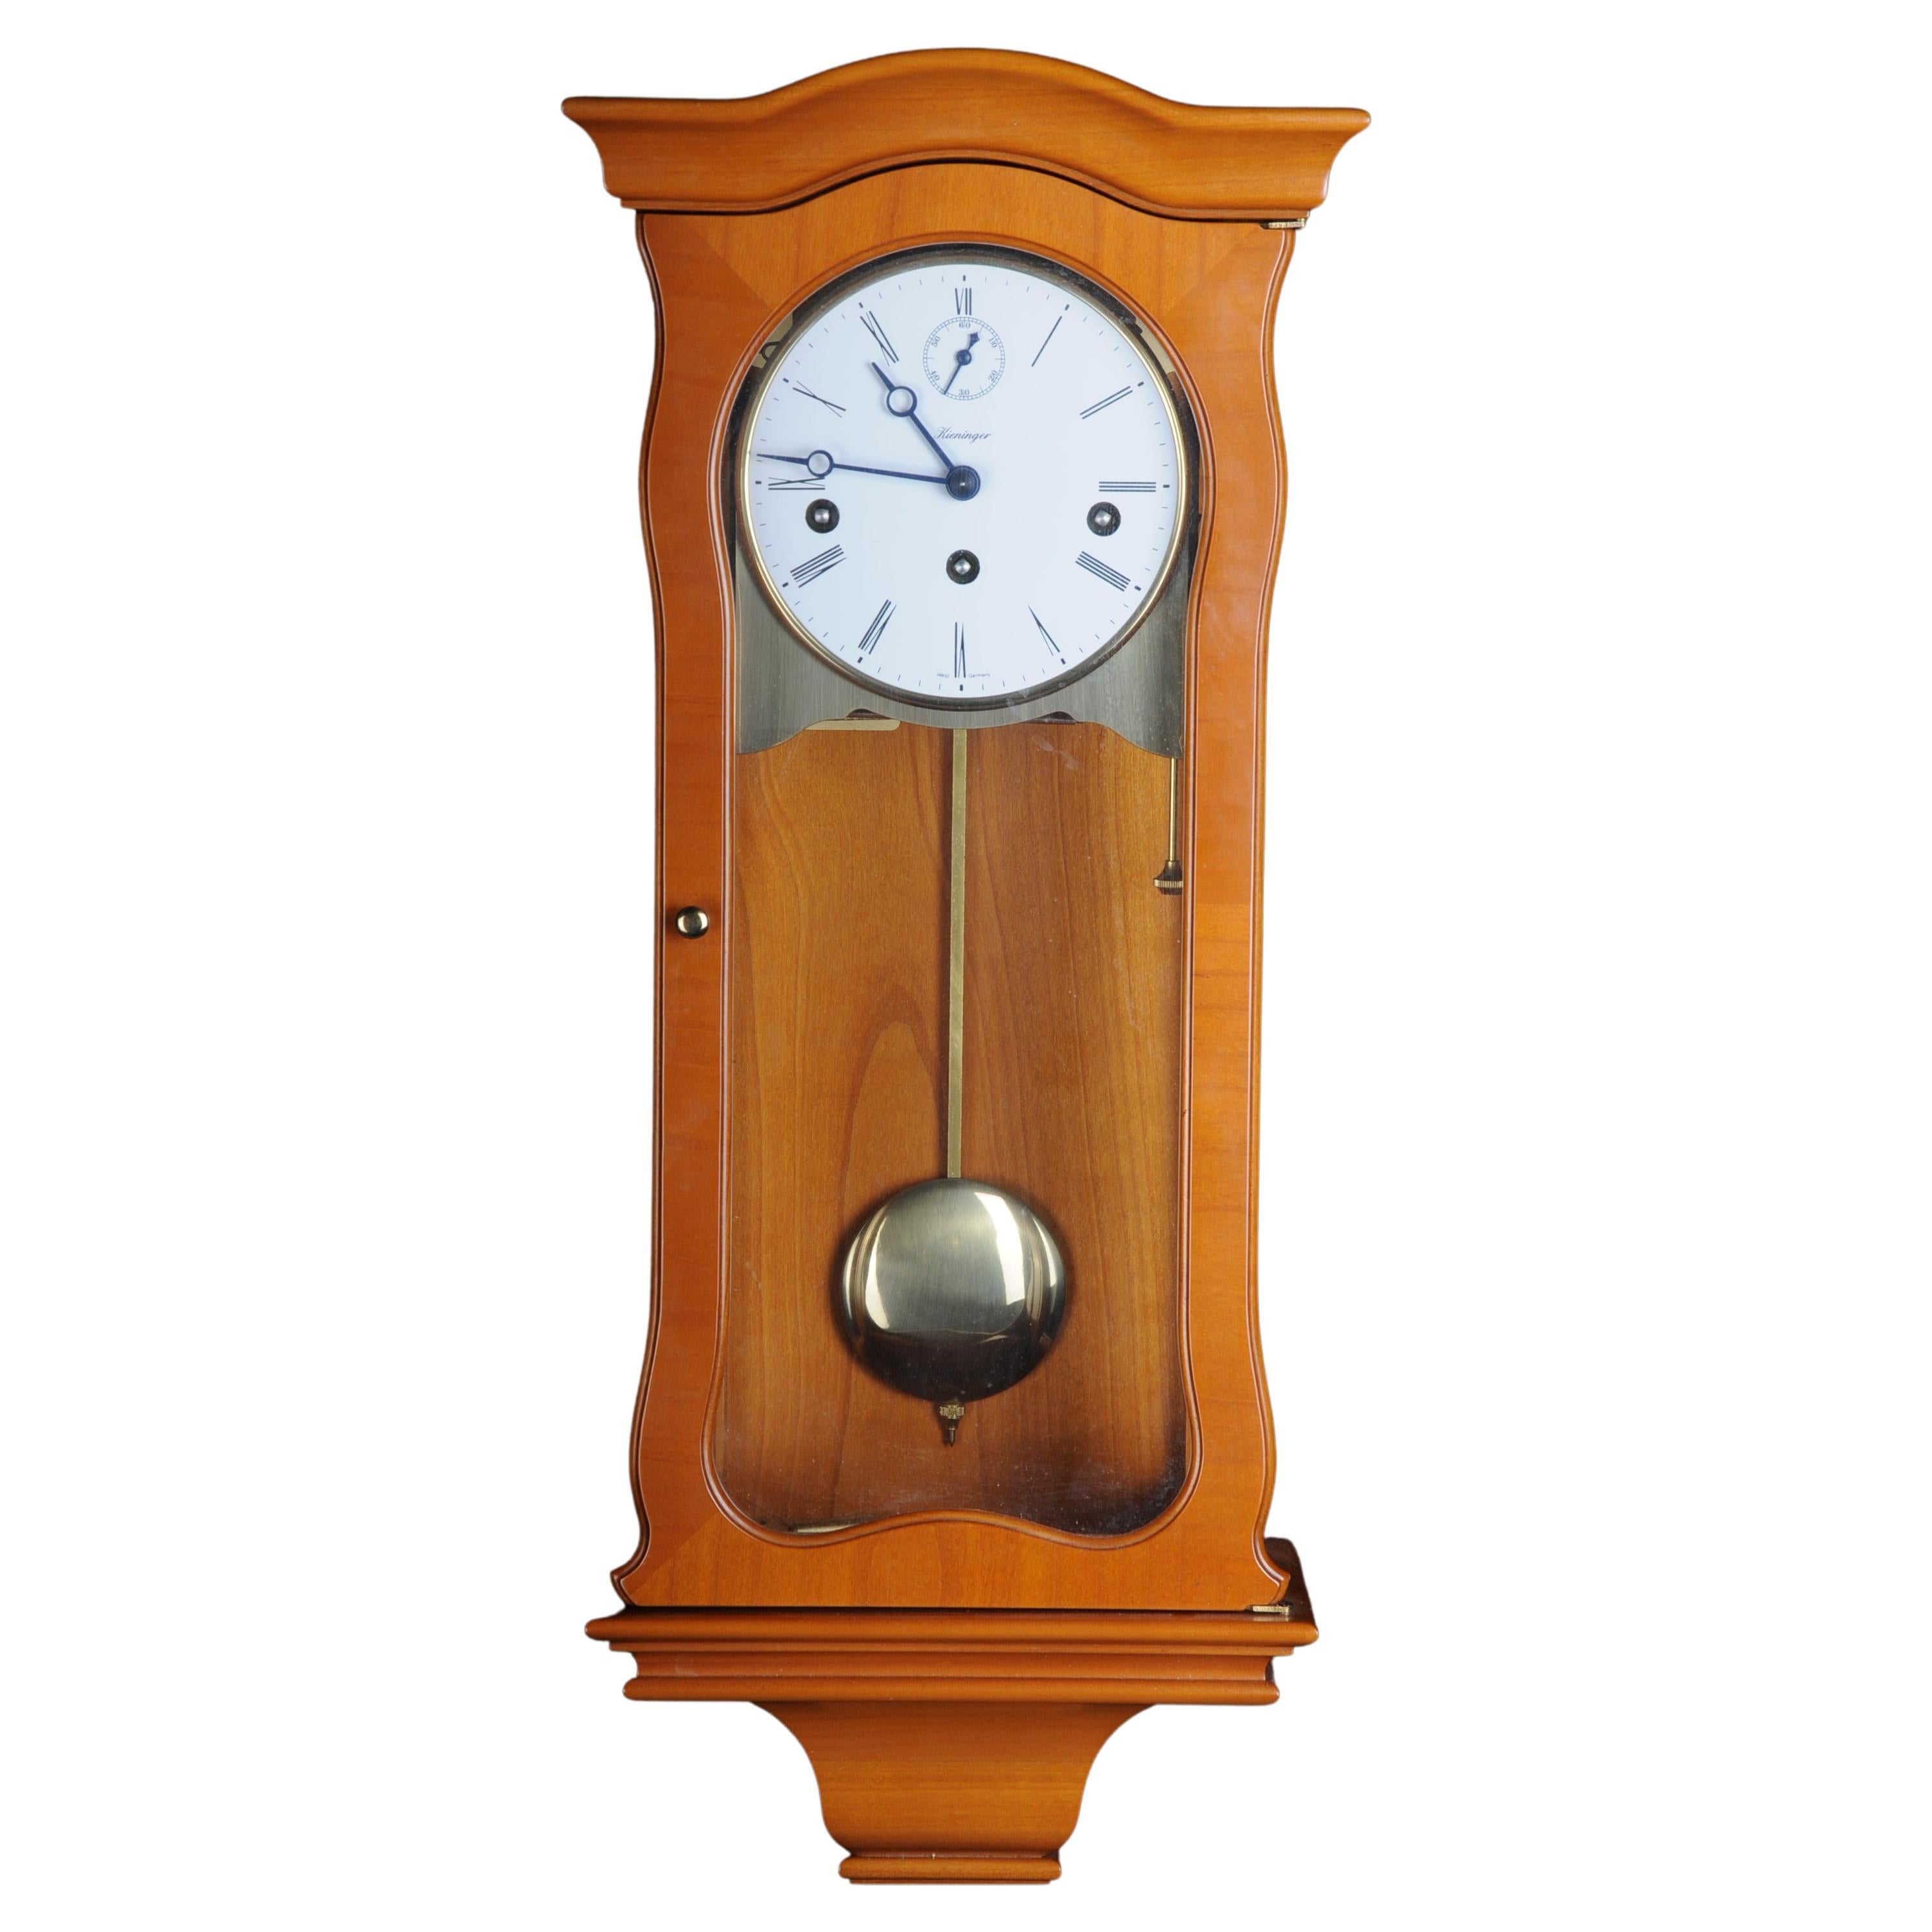 Regulator Wall Clock Vintage - 5 For Sale on 1stDibs